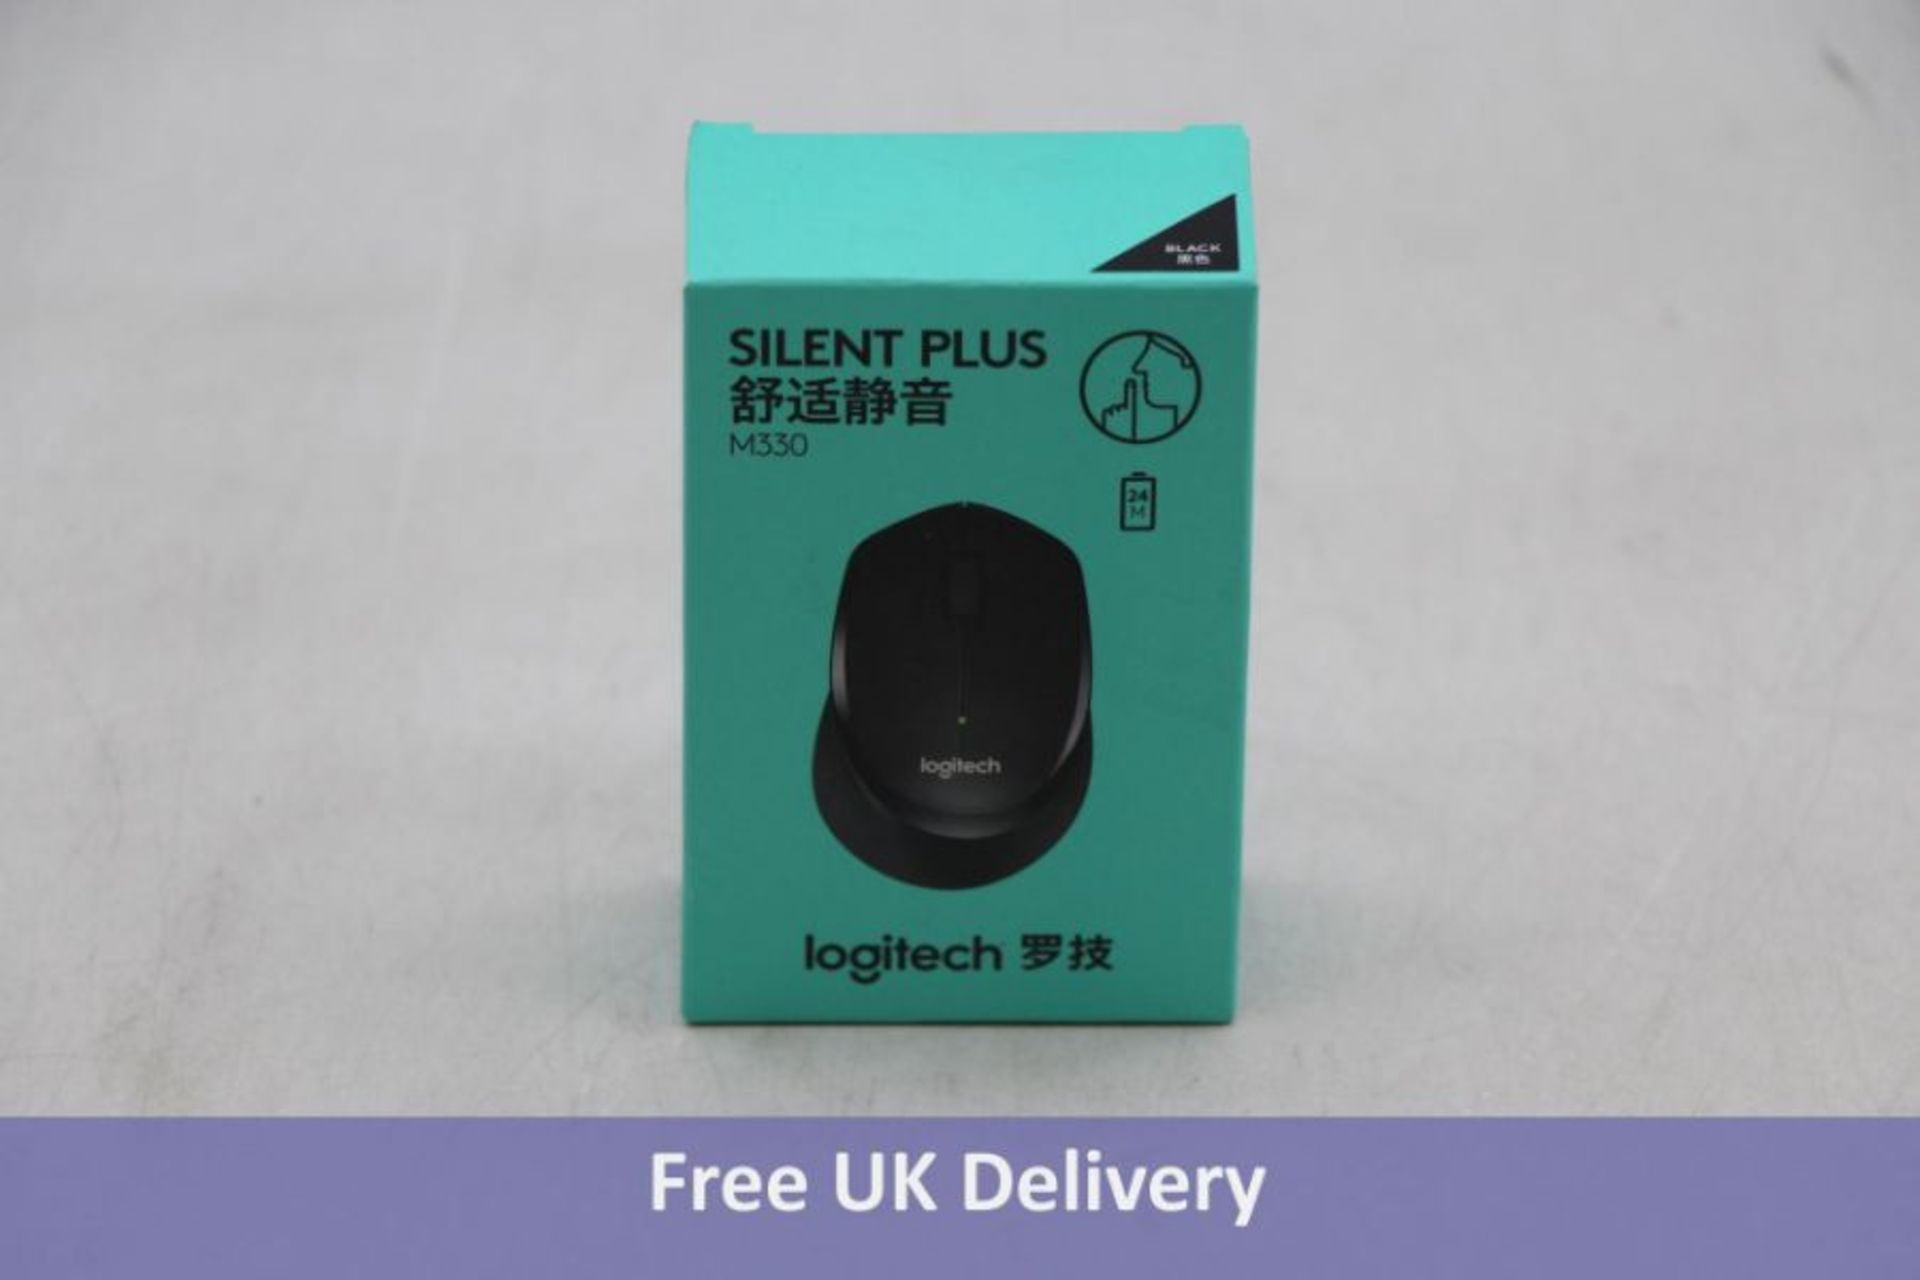 Twenty Logitech M330 Silent Plus Wireless Mice, Black - Image 4 of 4